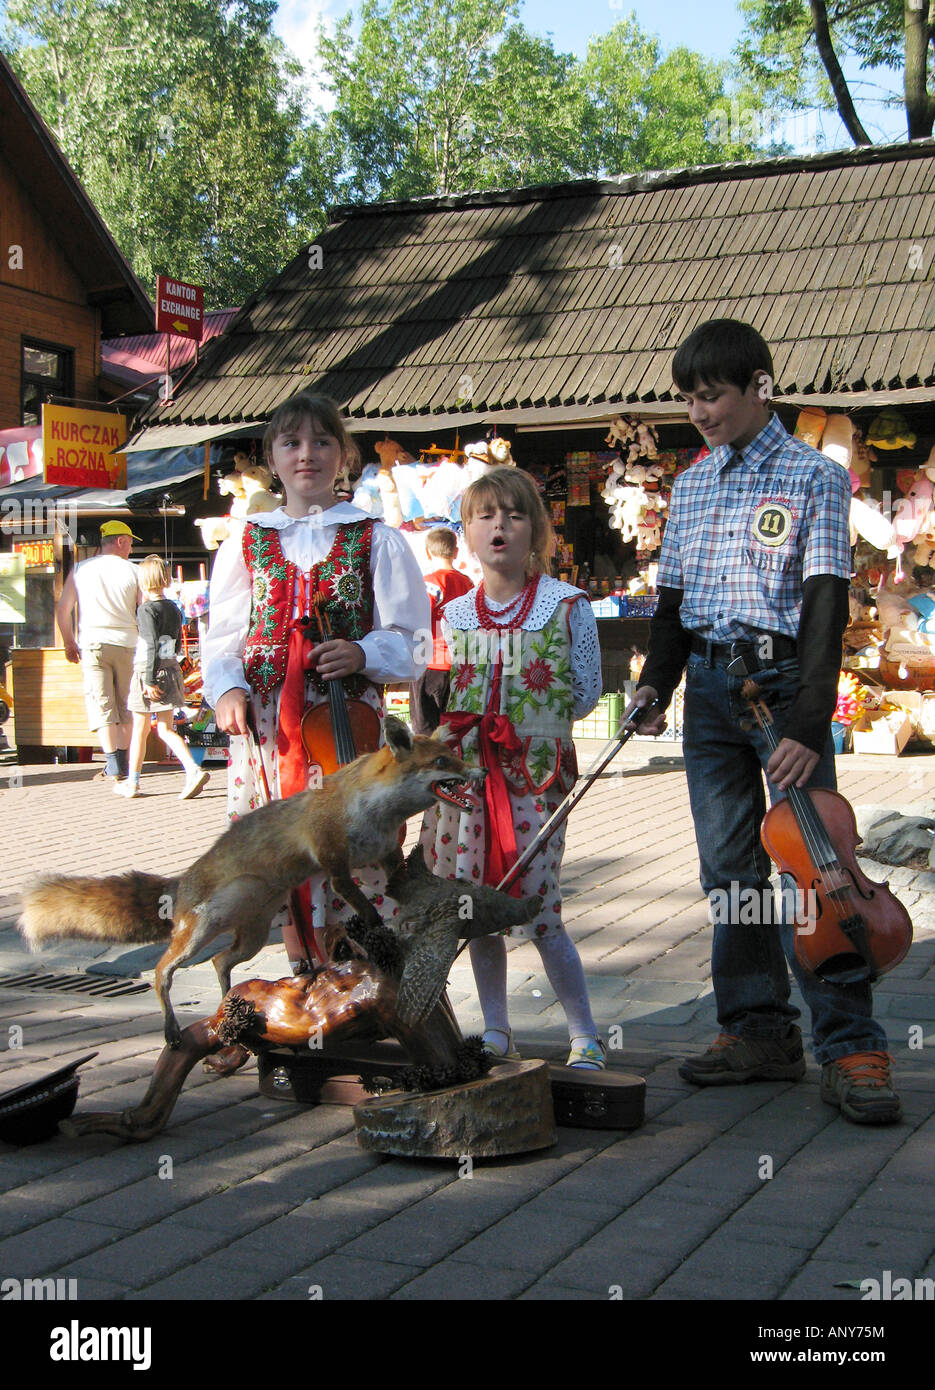 Poland Zakopane town Tatras Mt Krupowki Street children performing Stock Photo